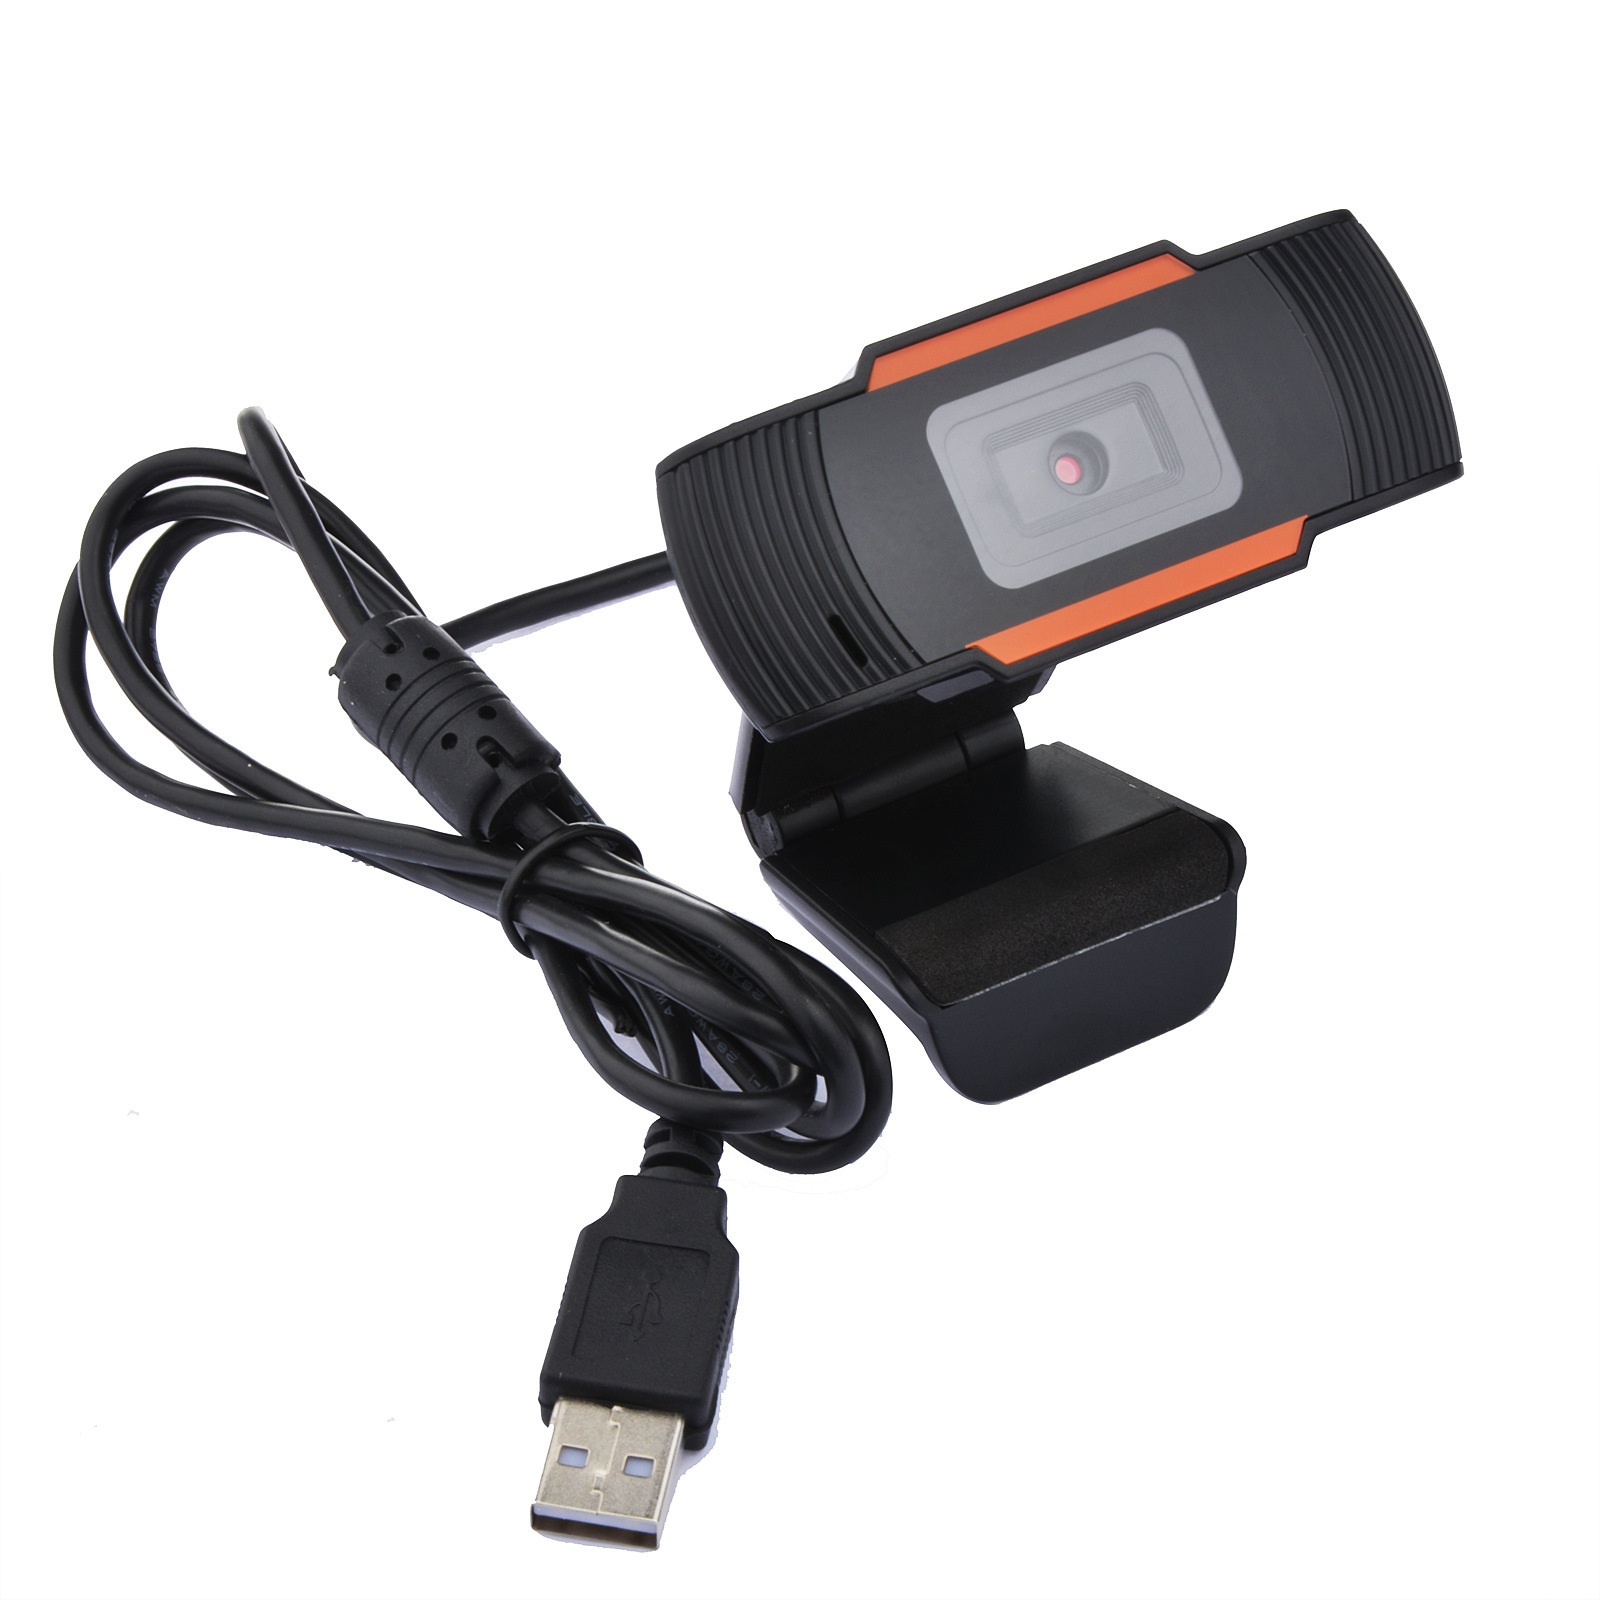 USB Webcam HD 1080P-camera voor computer PC Video-opname Network Live Webcamera met Microfoon Free Drive Streaming Widescreen Video